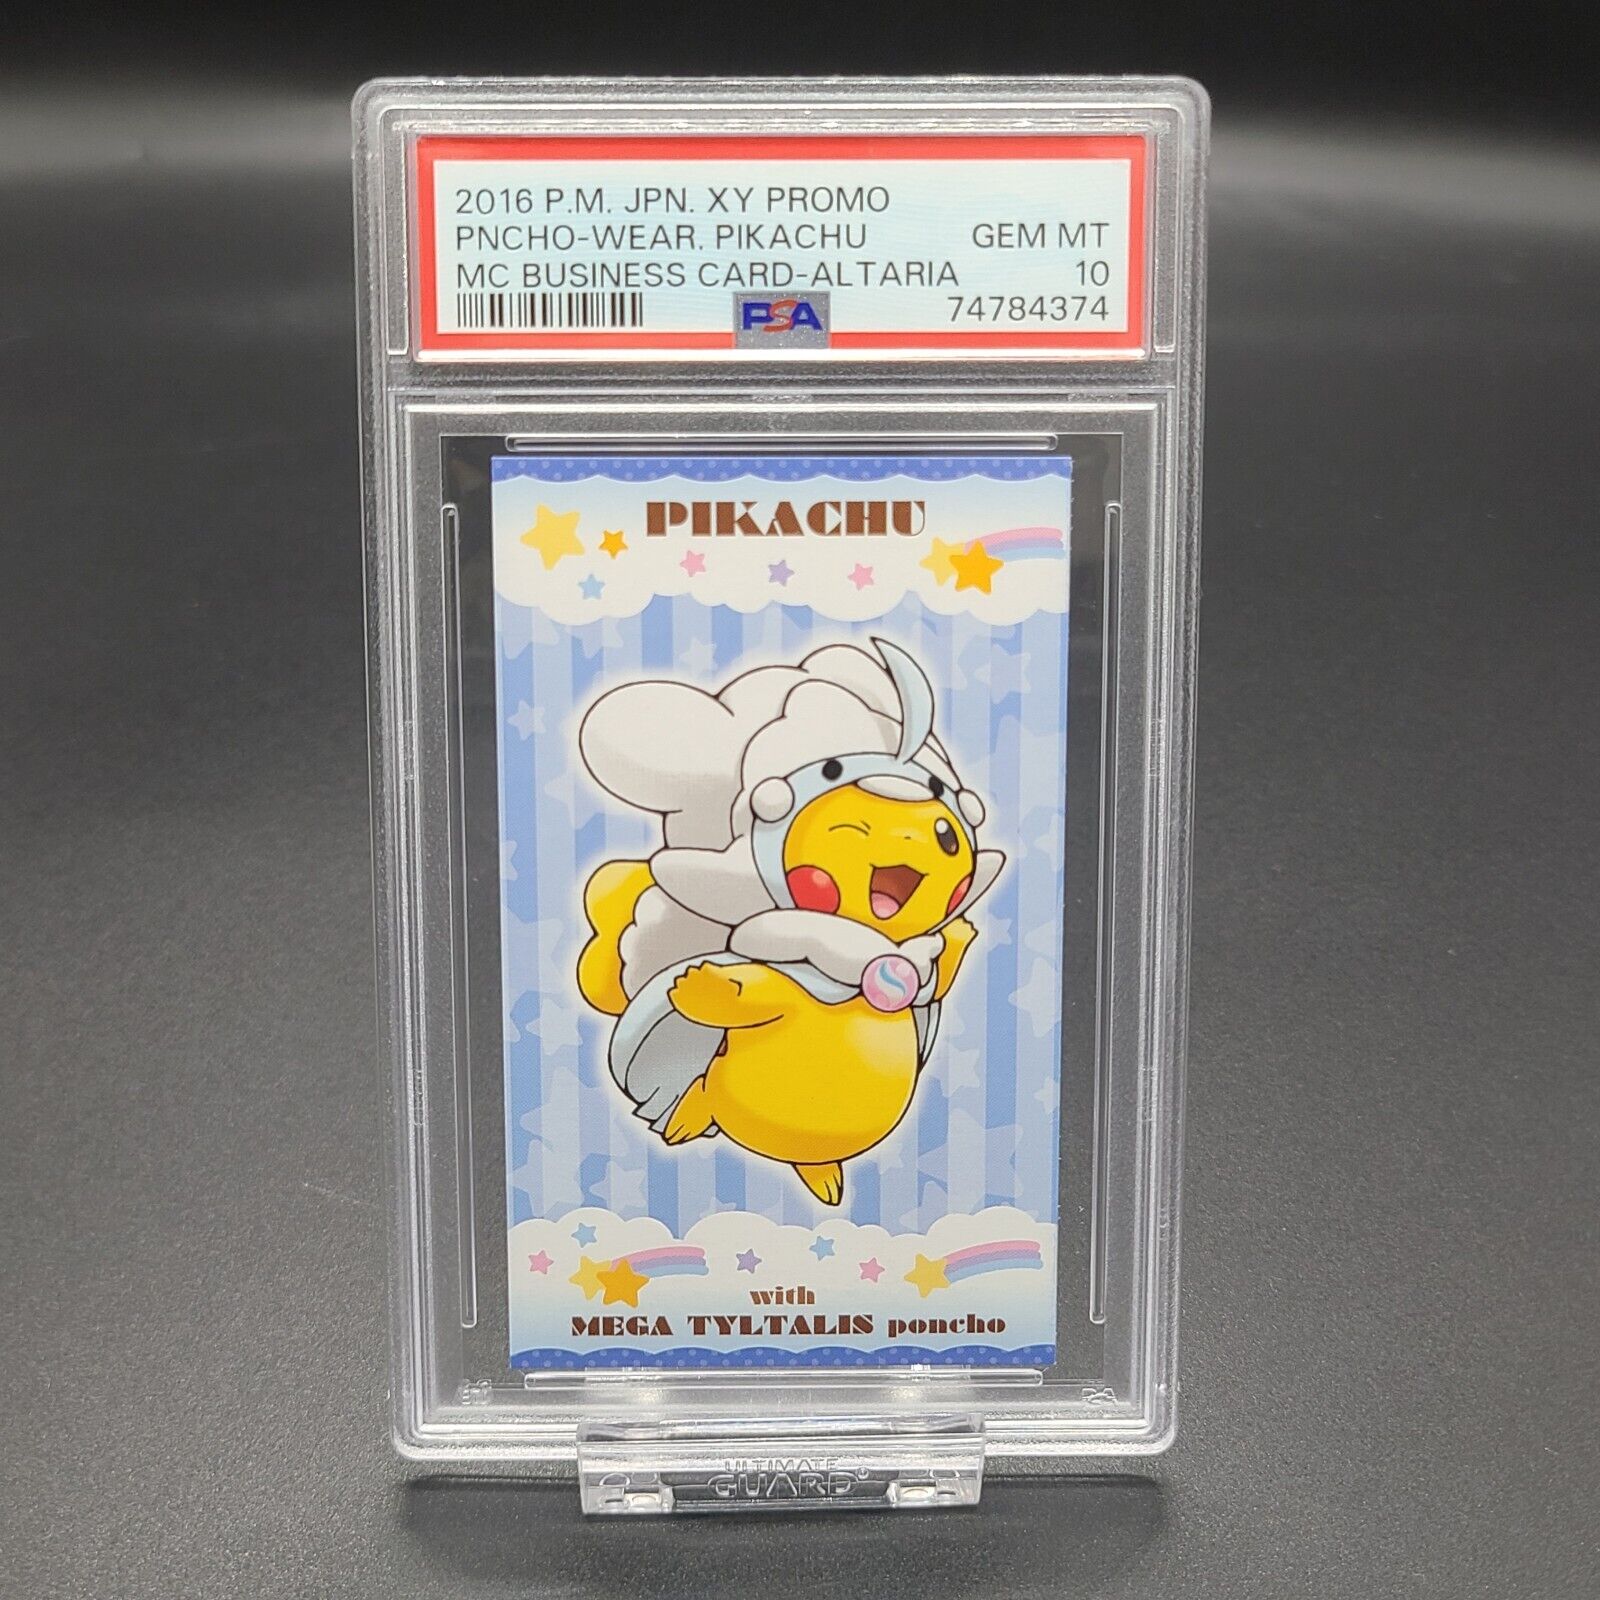 PSA10 Poncho Wear Pikachu Altaria Pokemon Japanese Promo MC Business Card 2016